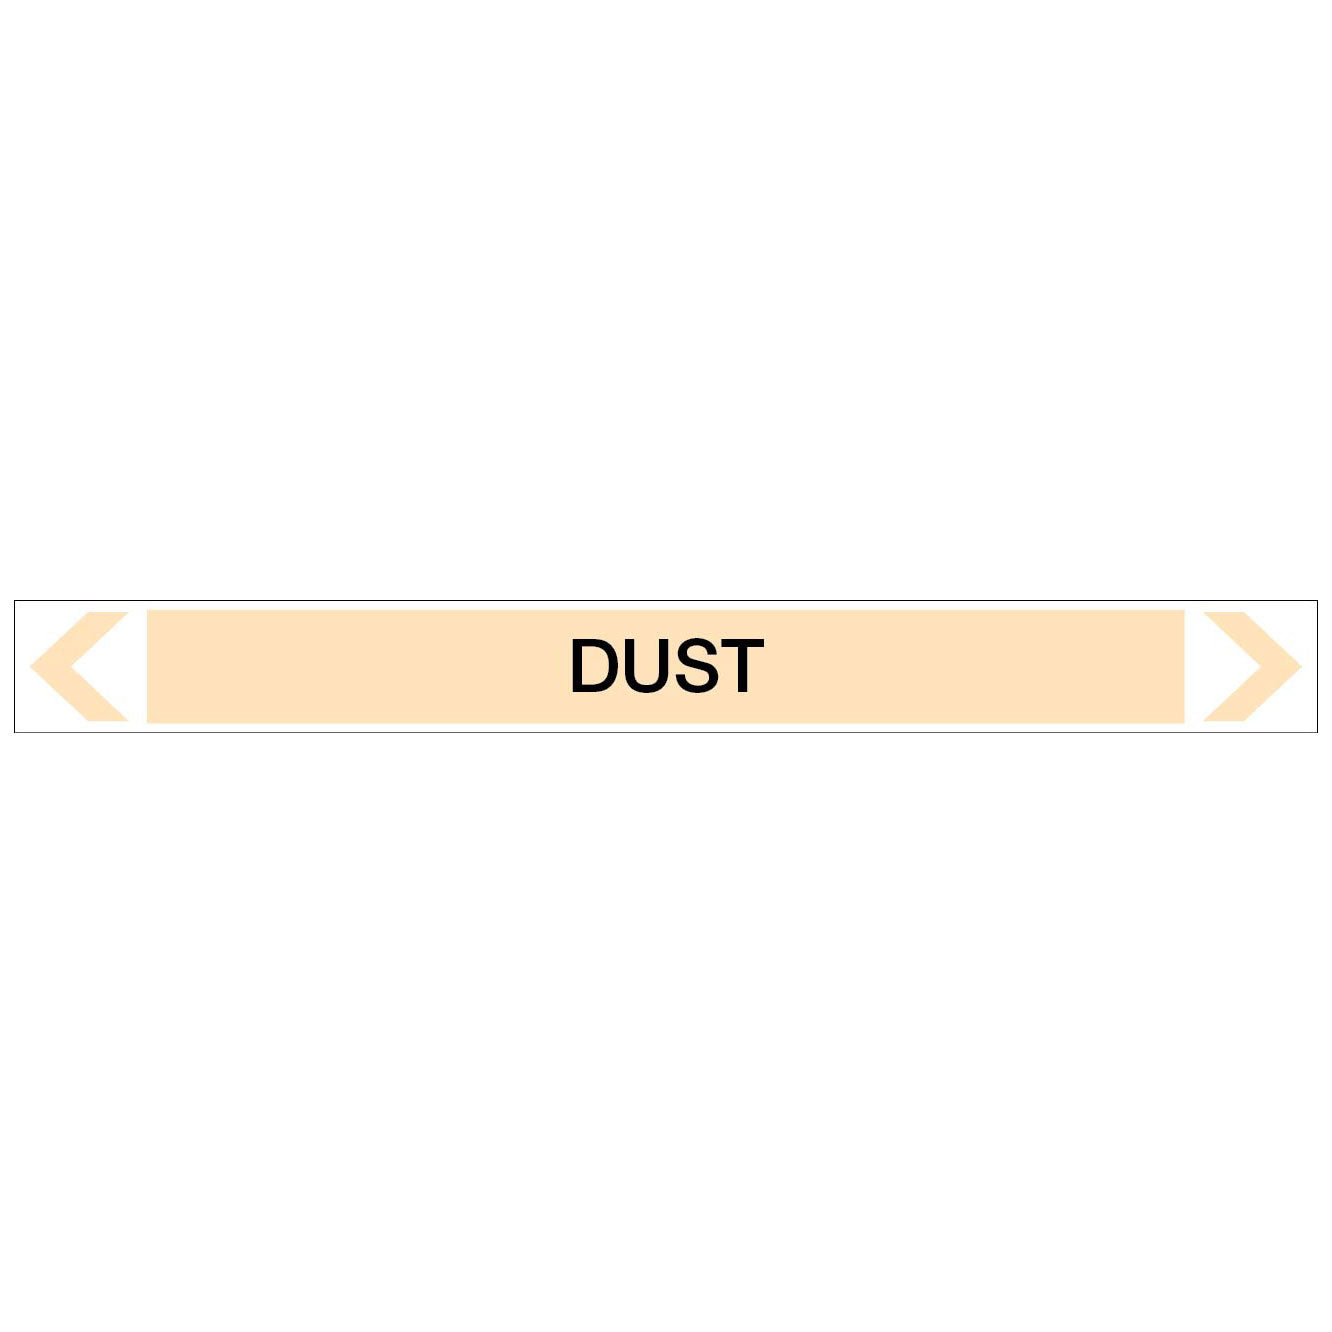 Gases - Dust - Pipe Marker Sticker